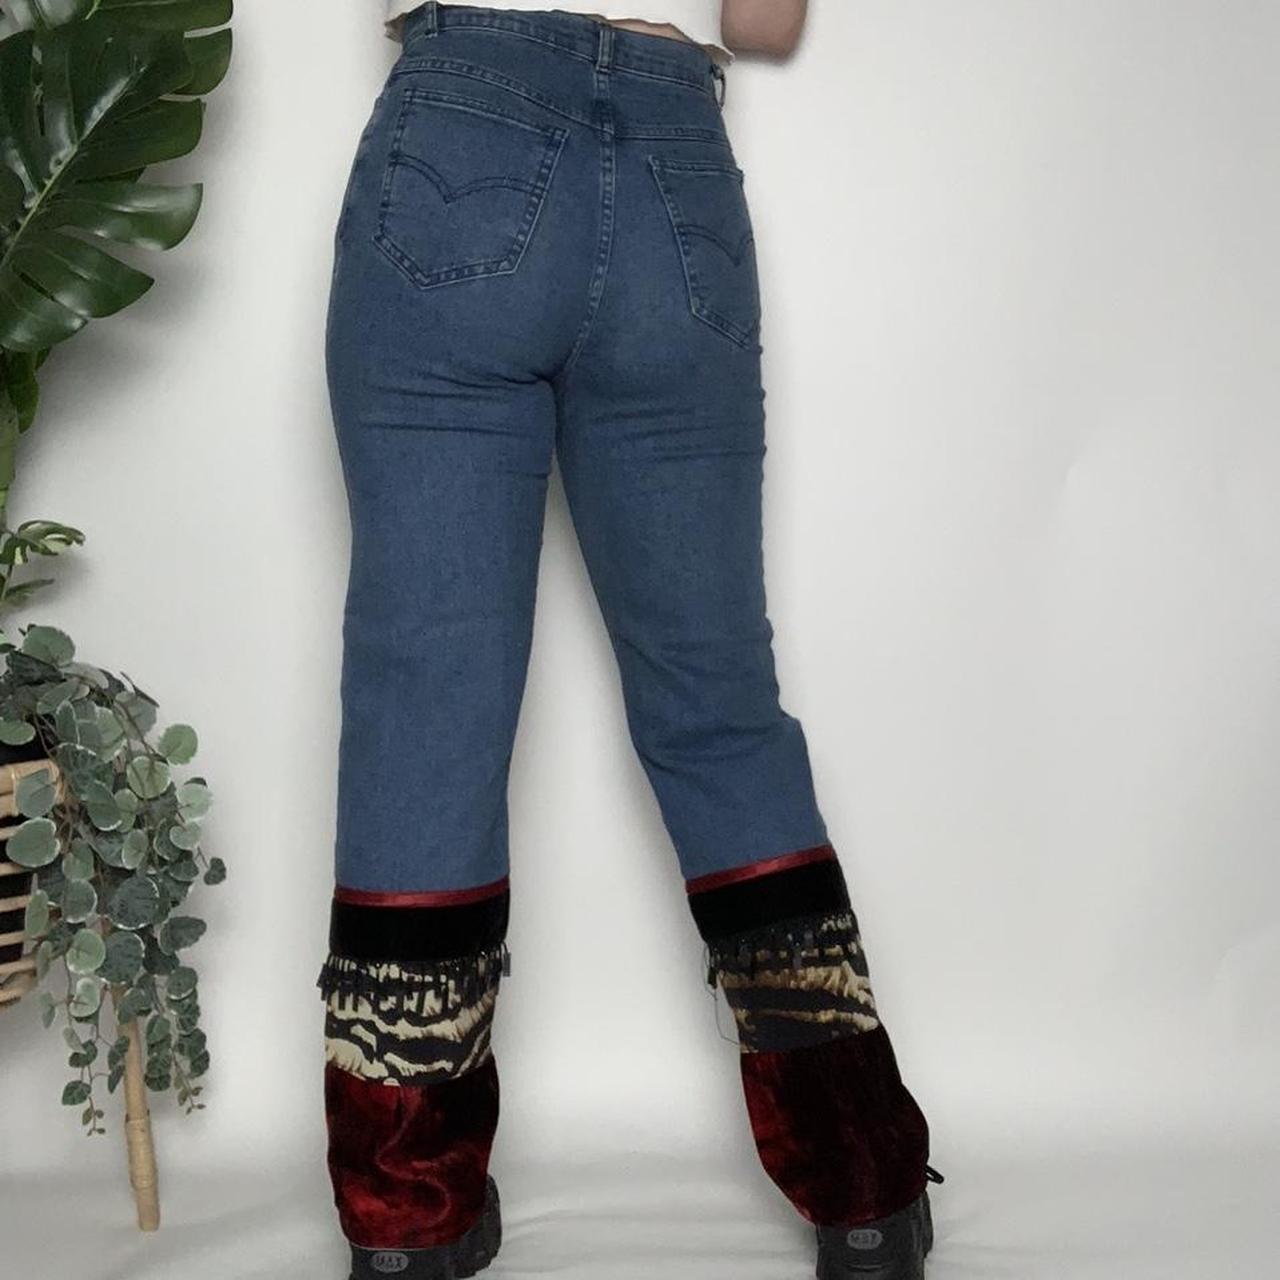 90s vintage high waist jeans with velvet bottoms